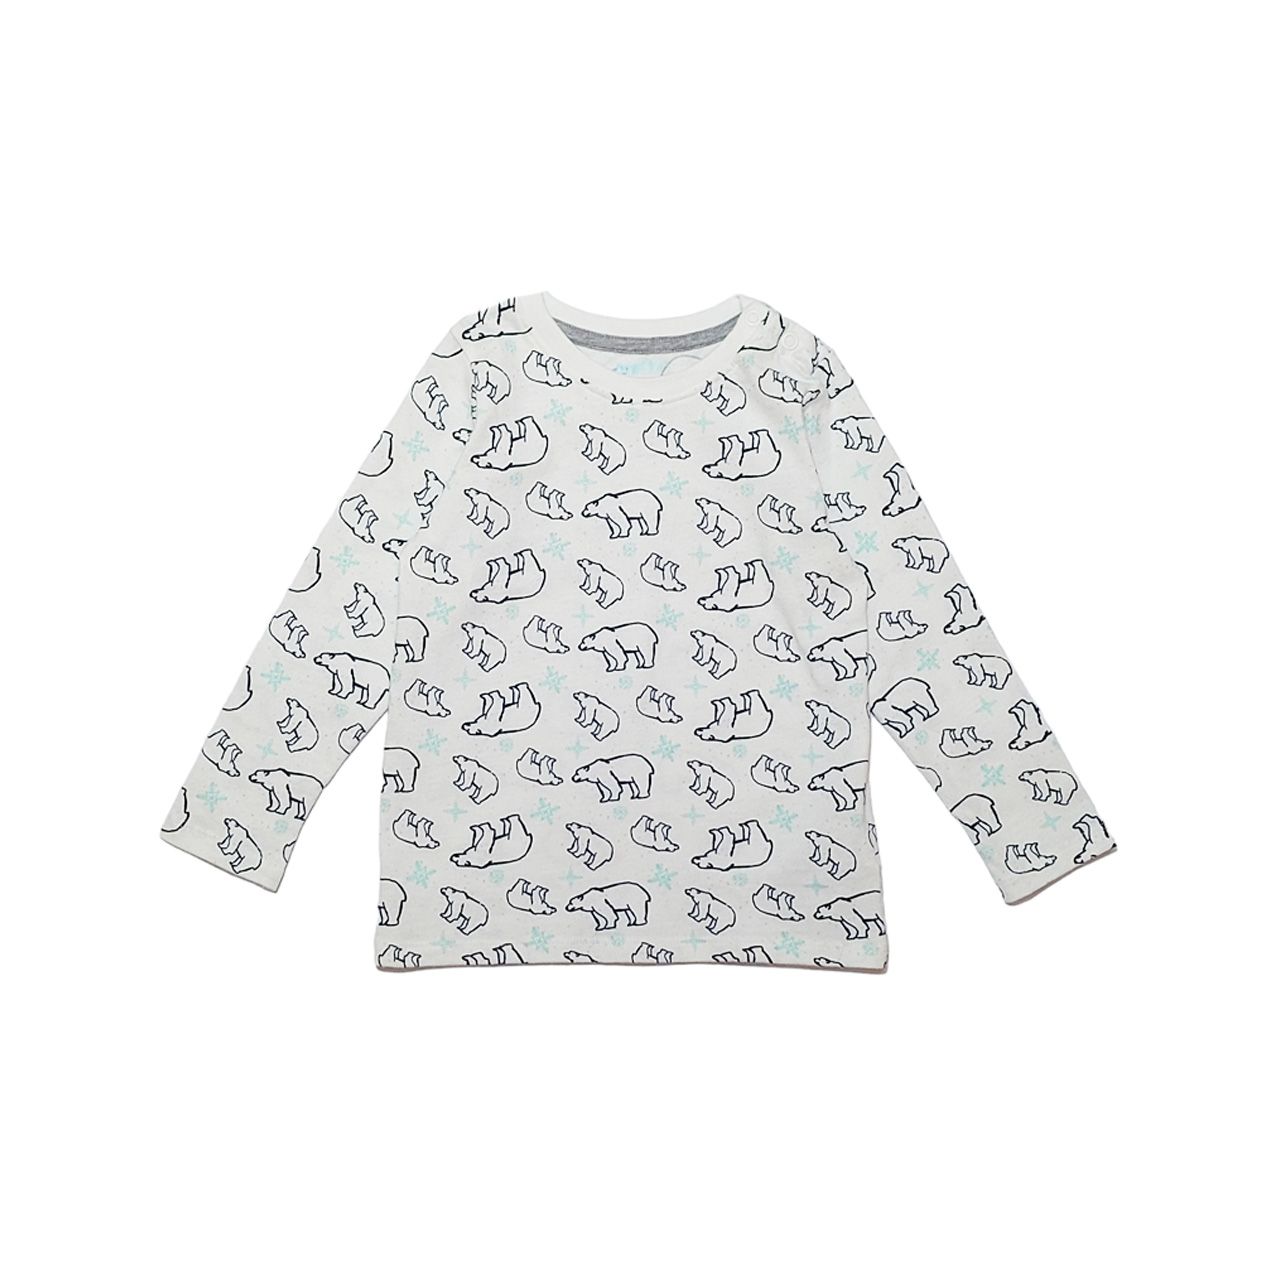 تی شرت آستین بلند نوزادی لوپیلو کد 4721 مجموعه 2 عددی -  - 3